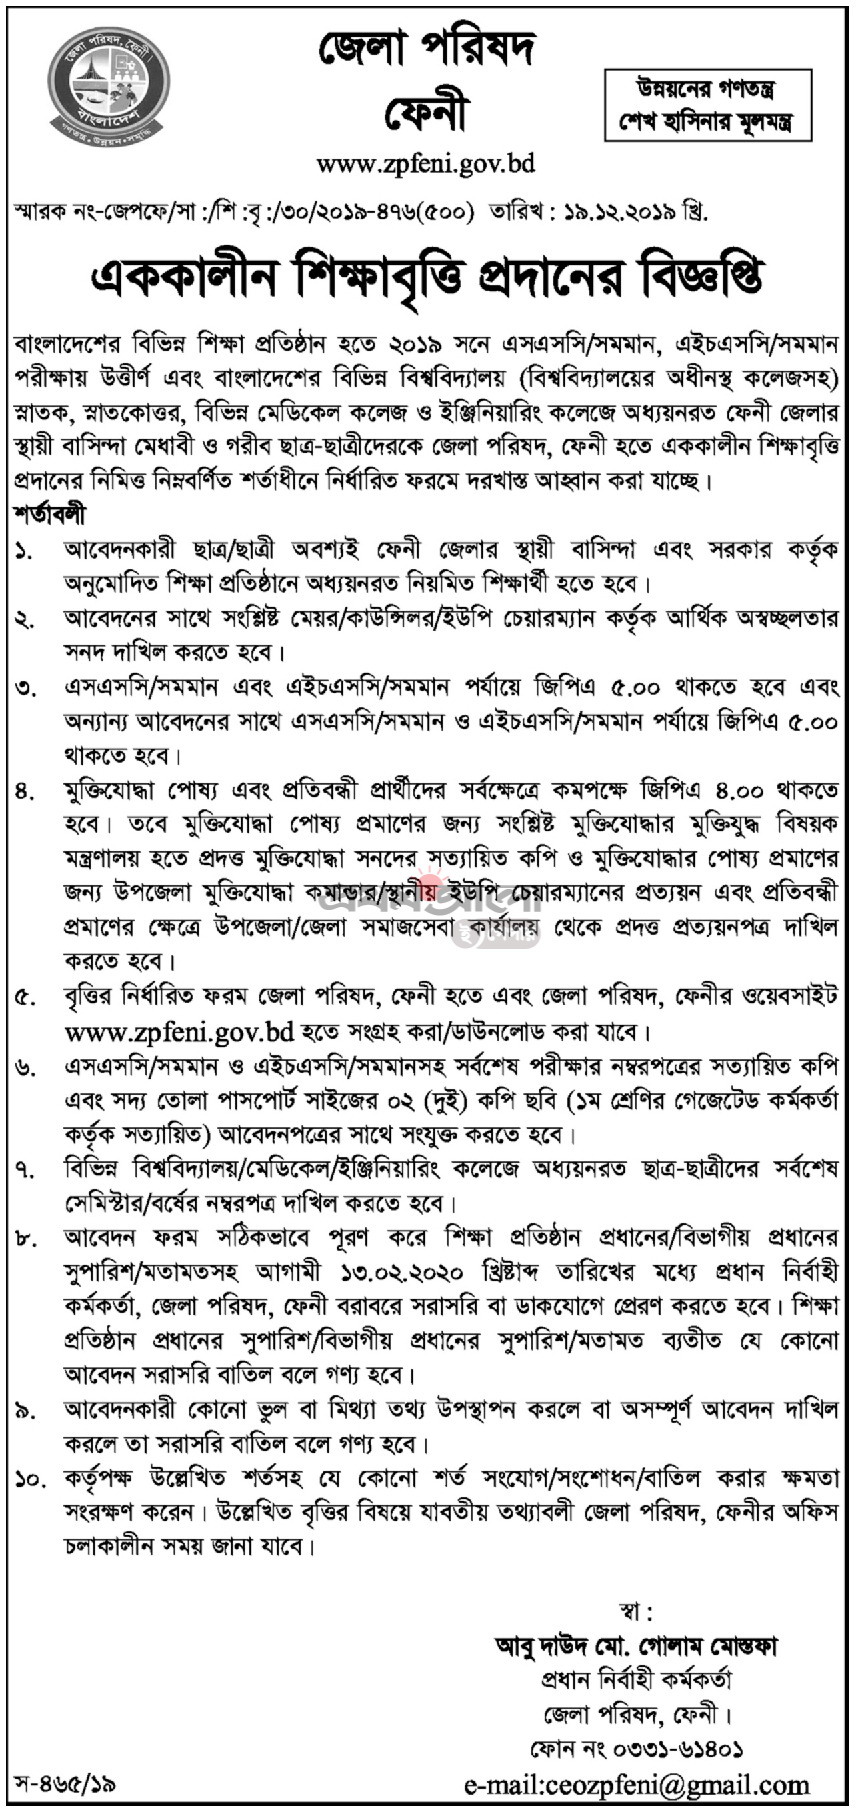 Zila Parishad Scholarship Circular Result 2020 Has Been Published My www.educationsinbd.com website You Can Save Or Download This rangpur, Sirajgonj , Feni Zila Parishad